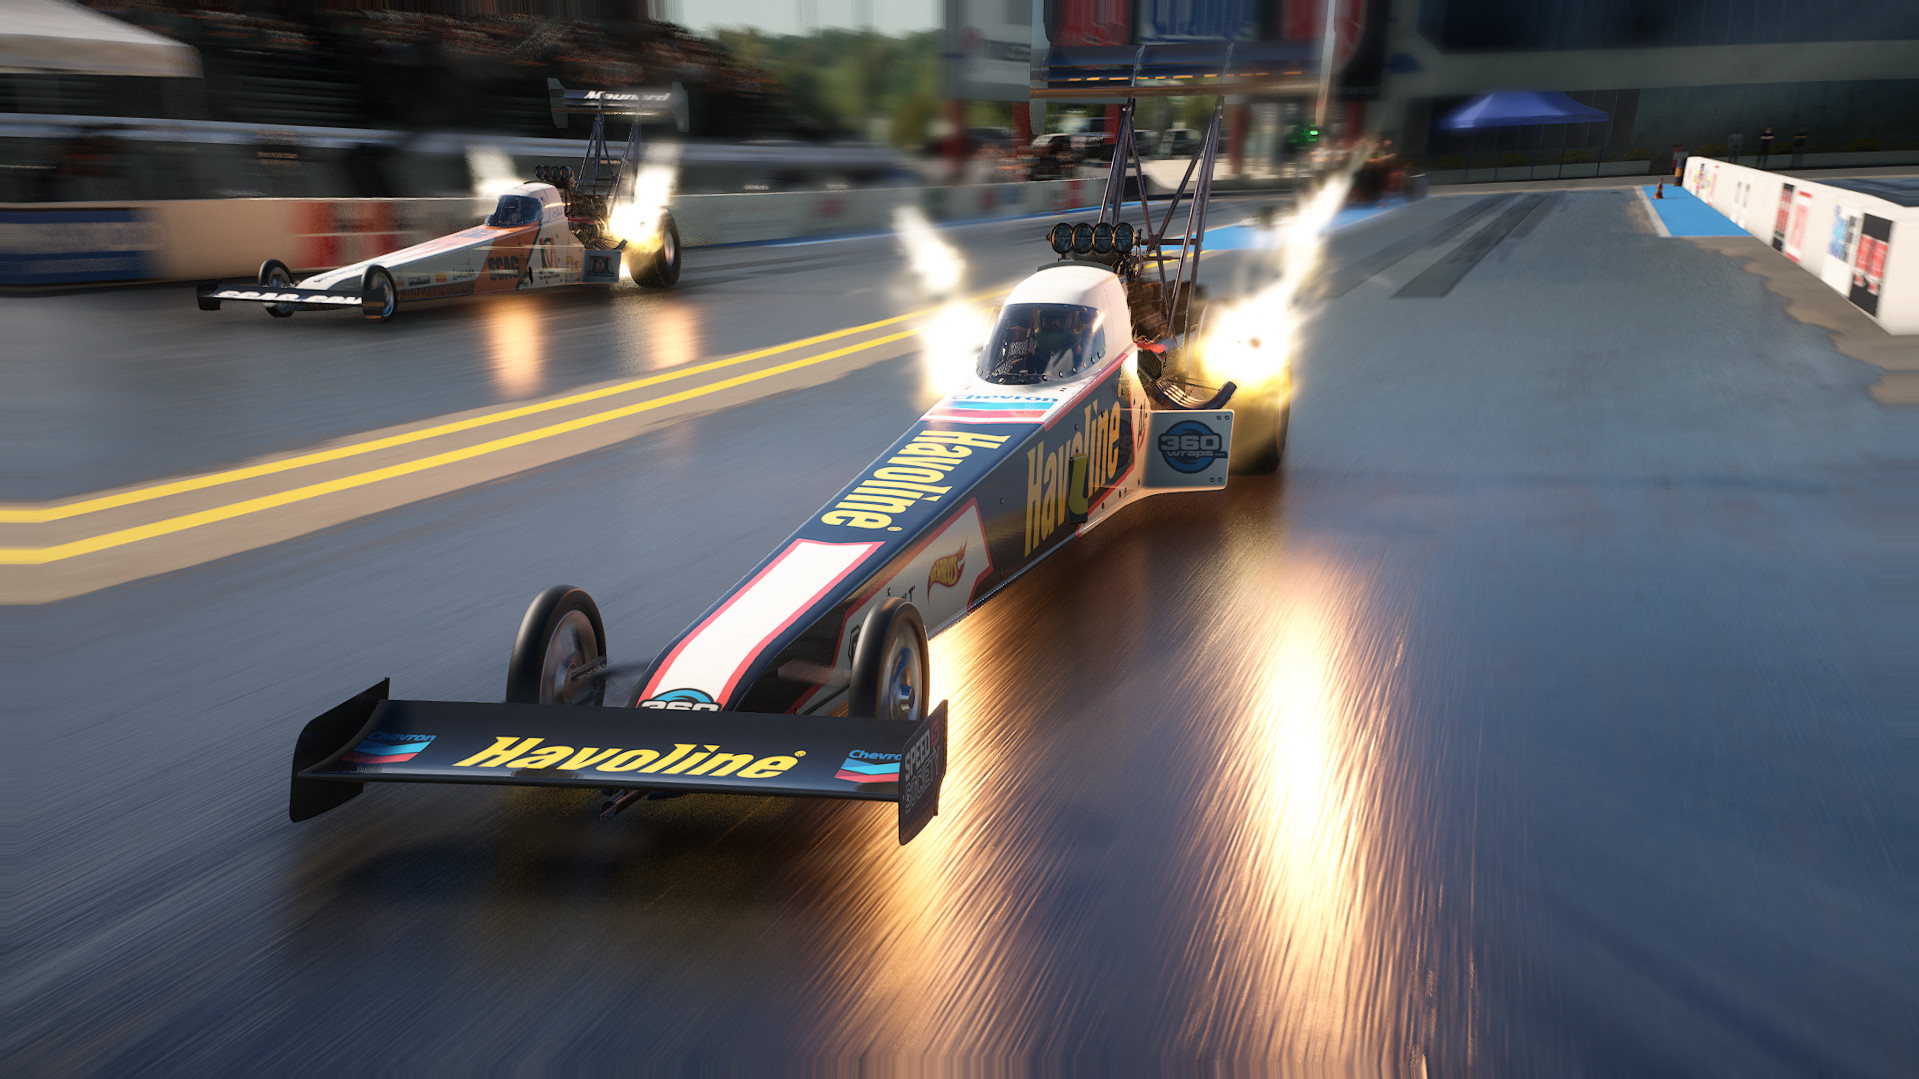 NHRA Championship Drag Racing: Speed For All Steam CD Key